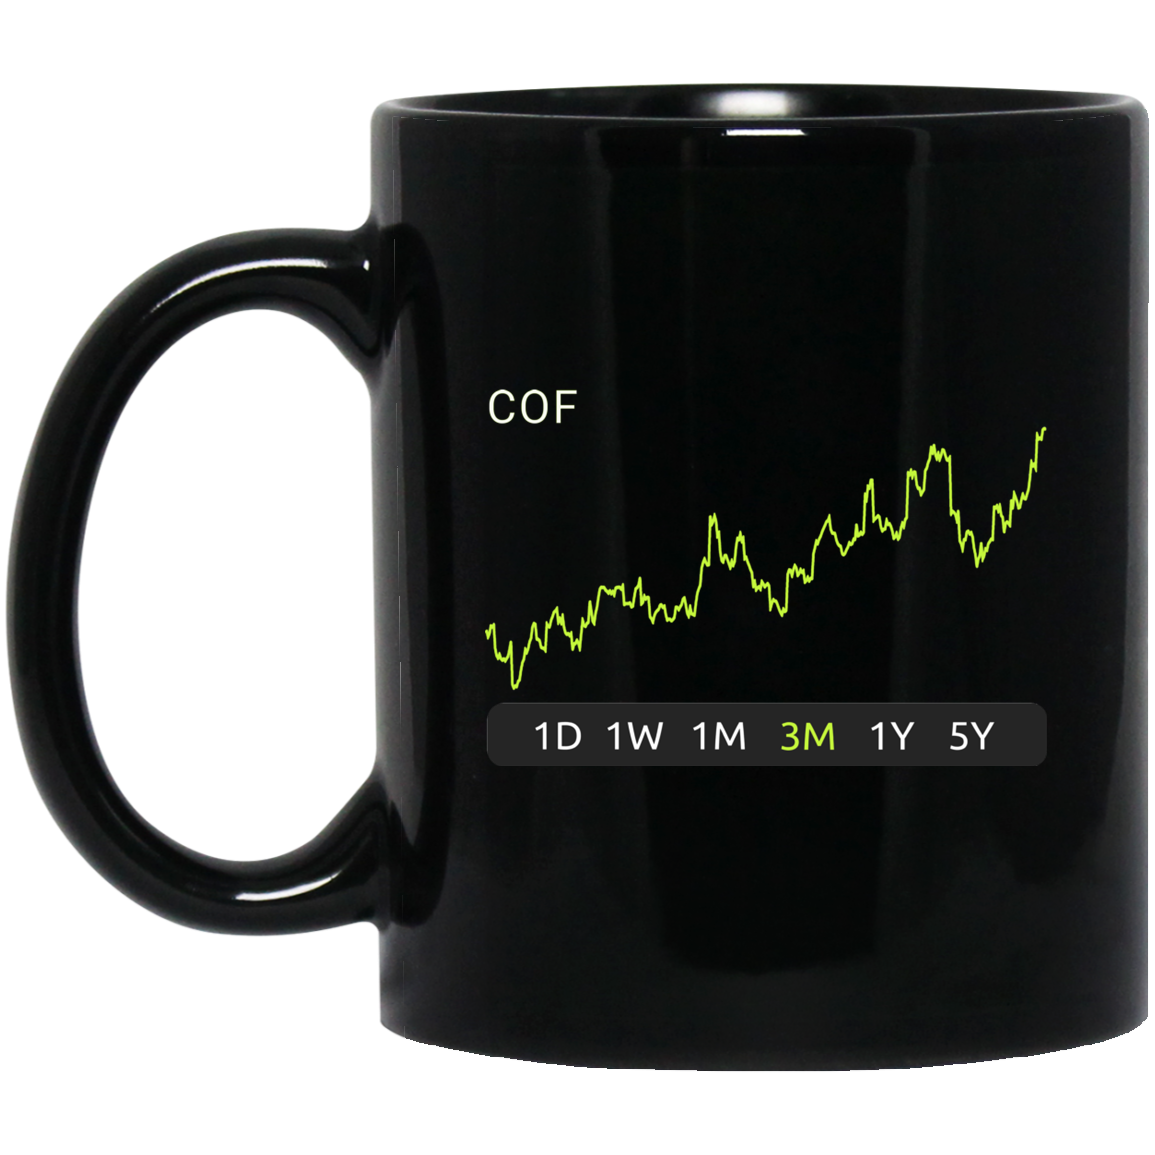 COF Stock 3m Mug